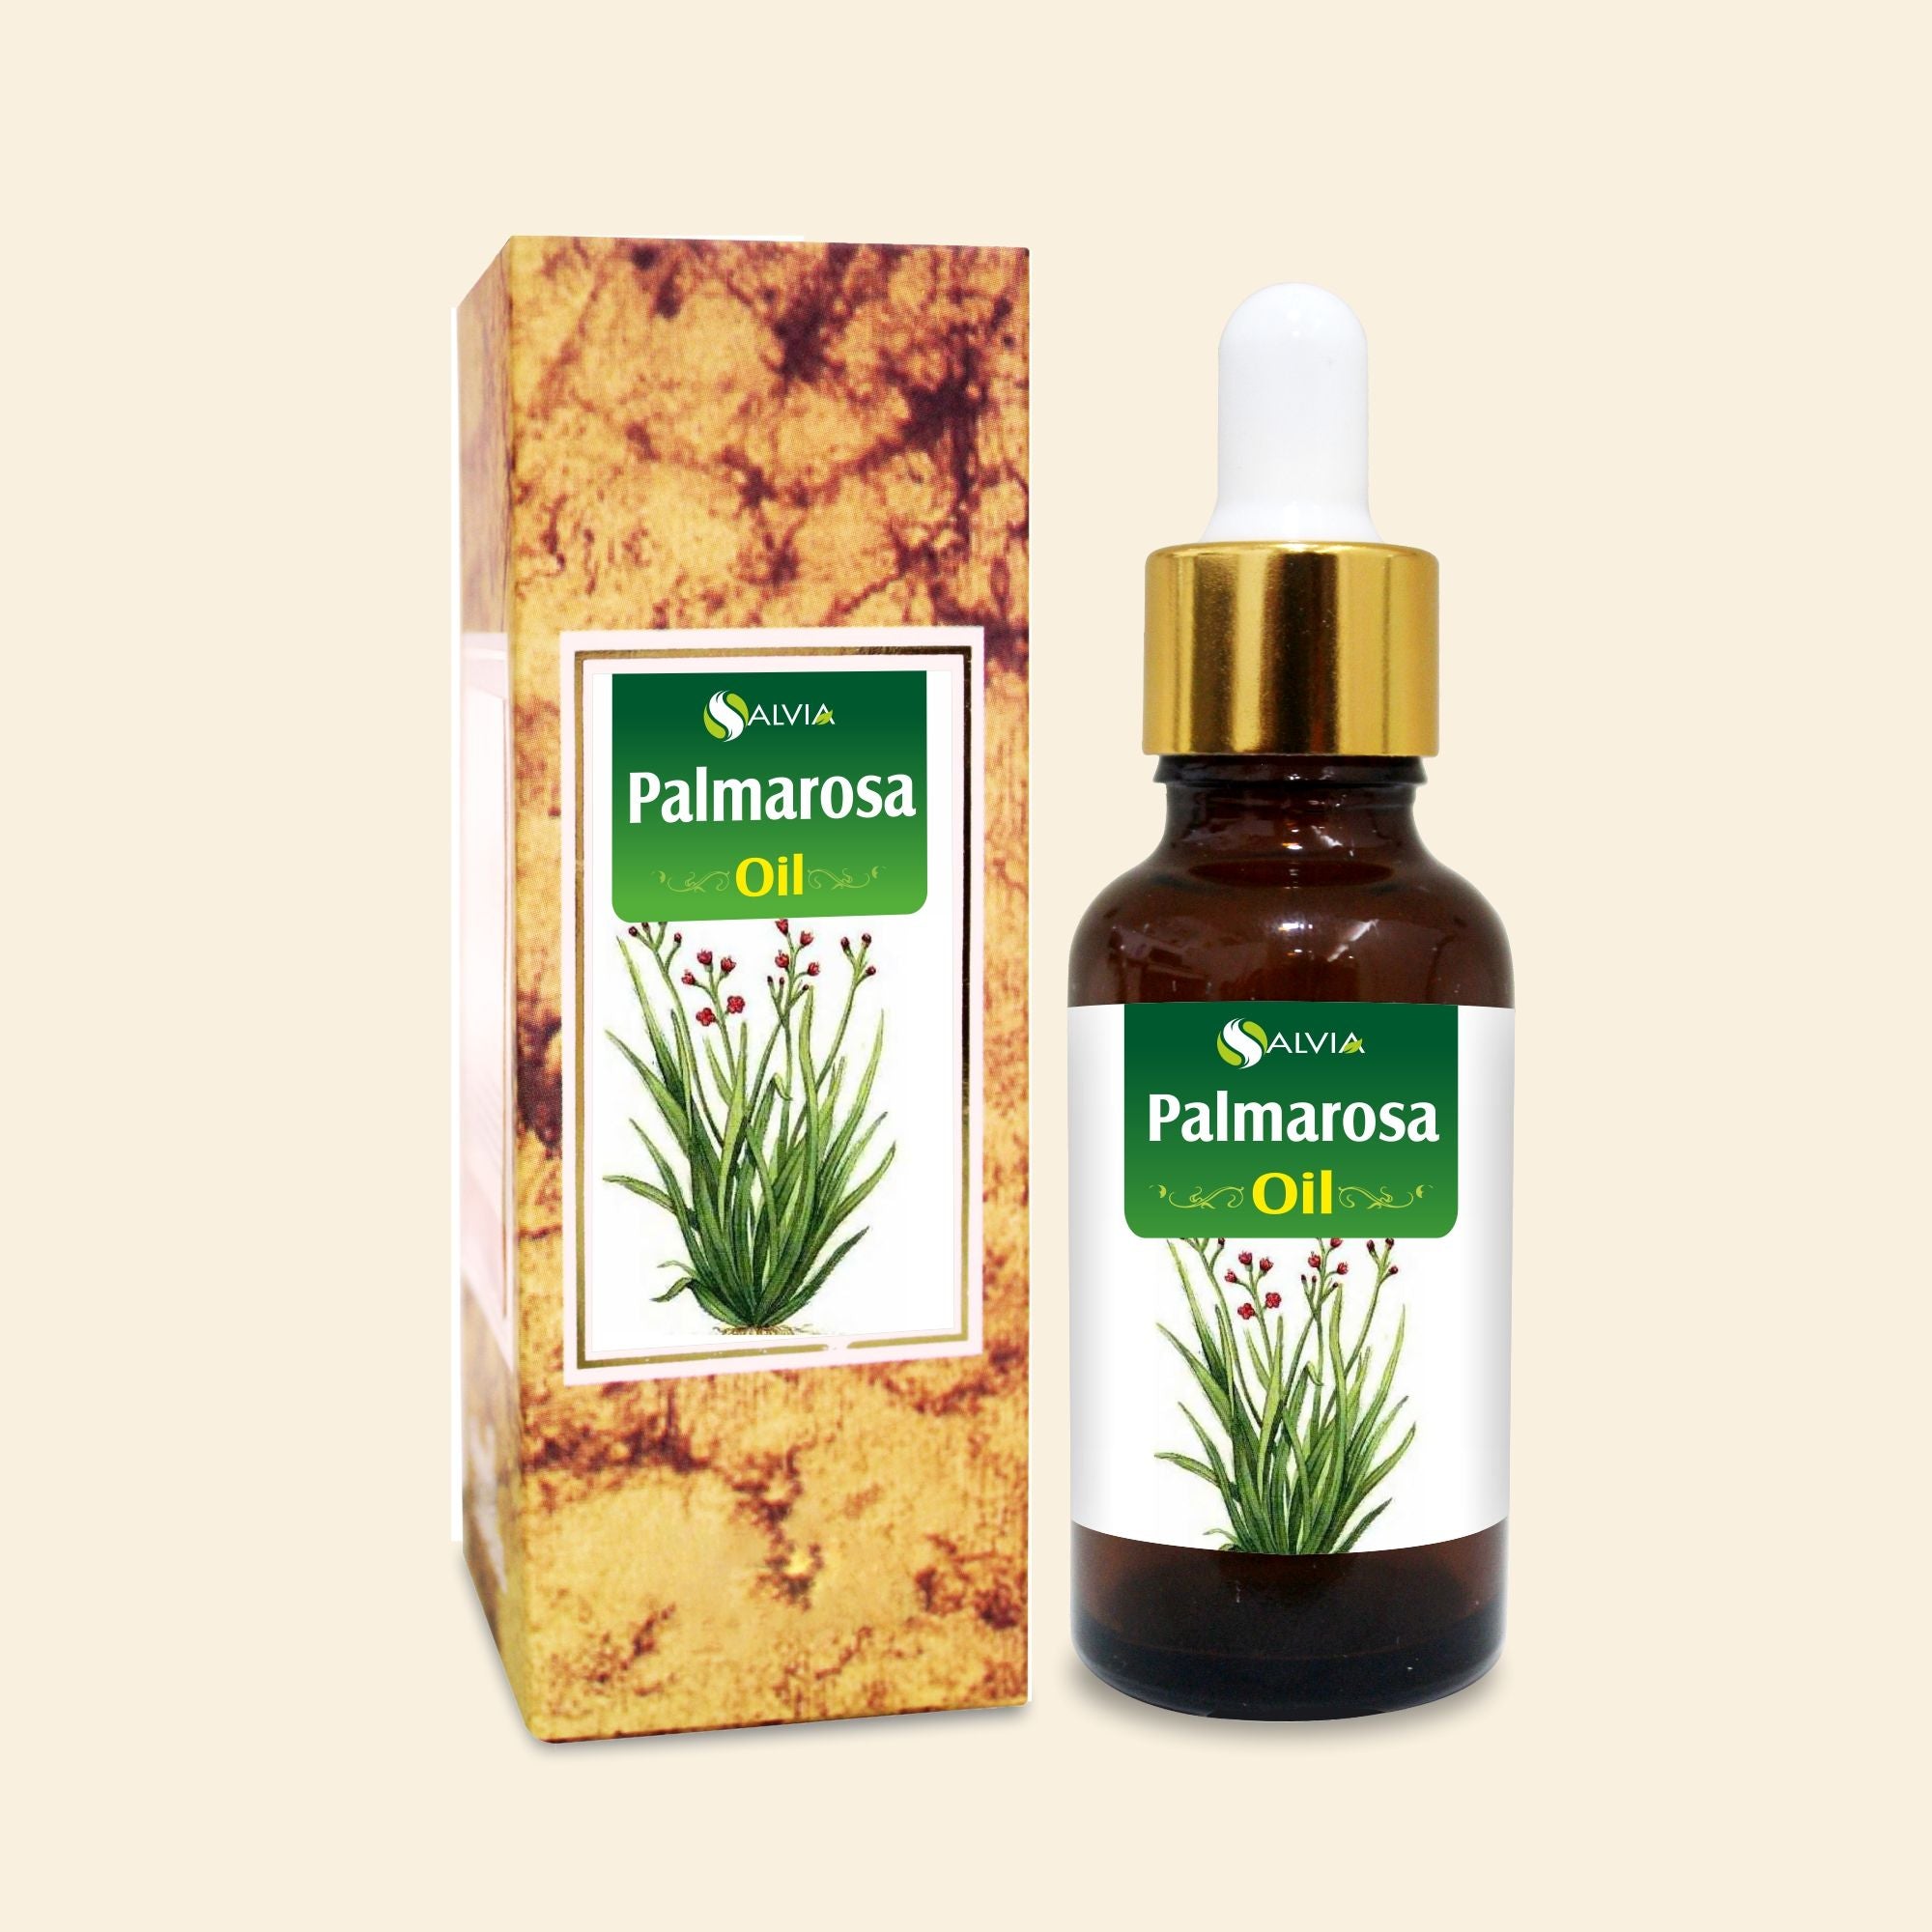 Salvia Natural Essential Oils Palmarosa Oil (Cymbopogon martinii ) 100% Natural Pure Essential Oil